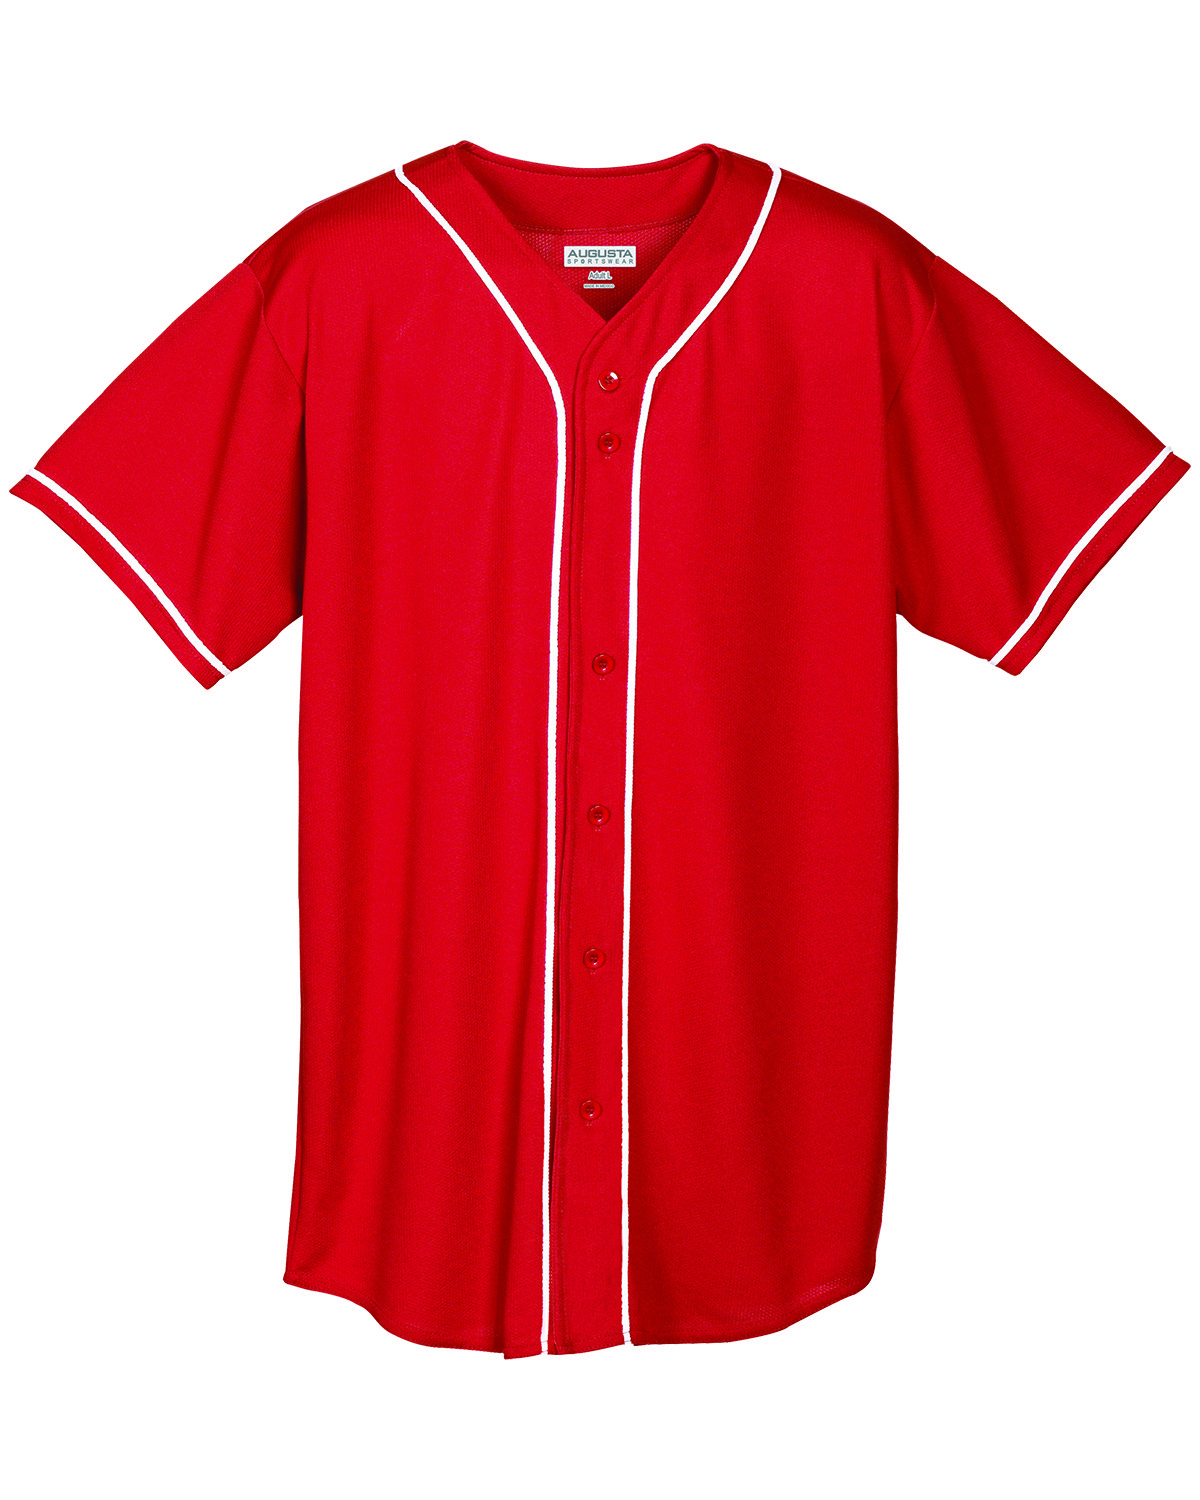 Baseball Jerseys for sale in Atlanta, Georgia